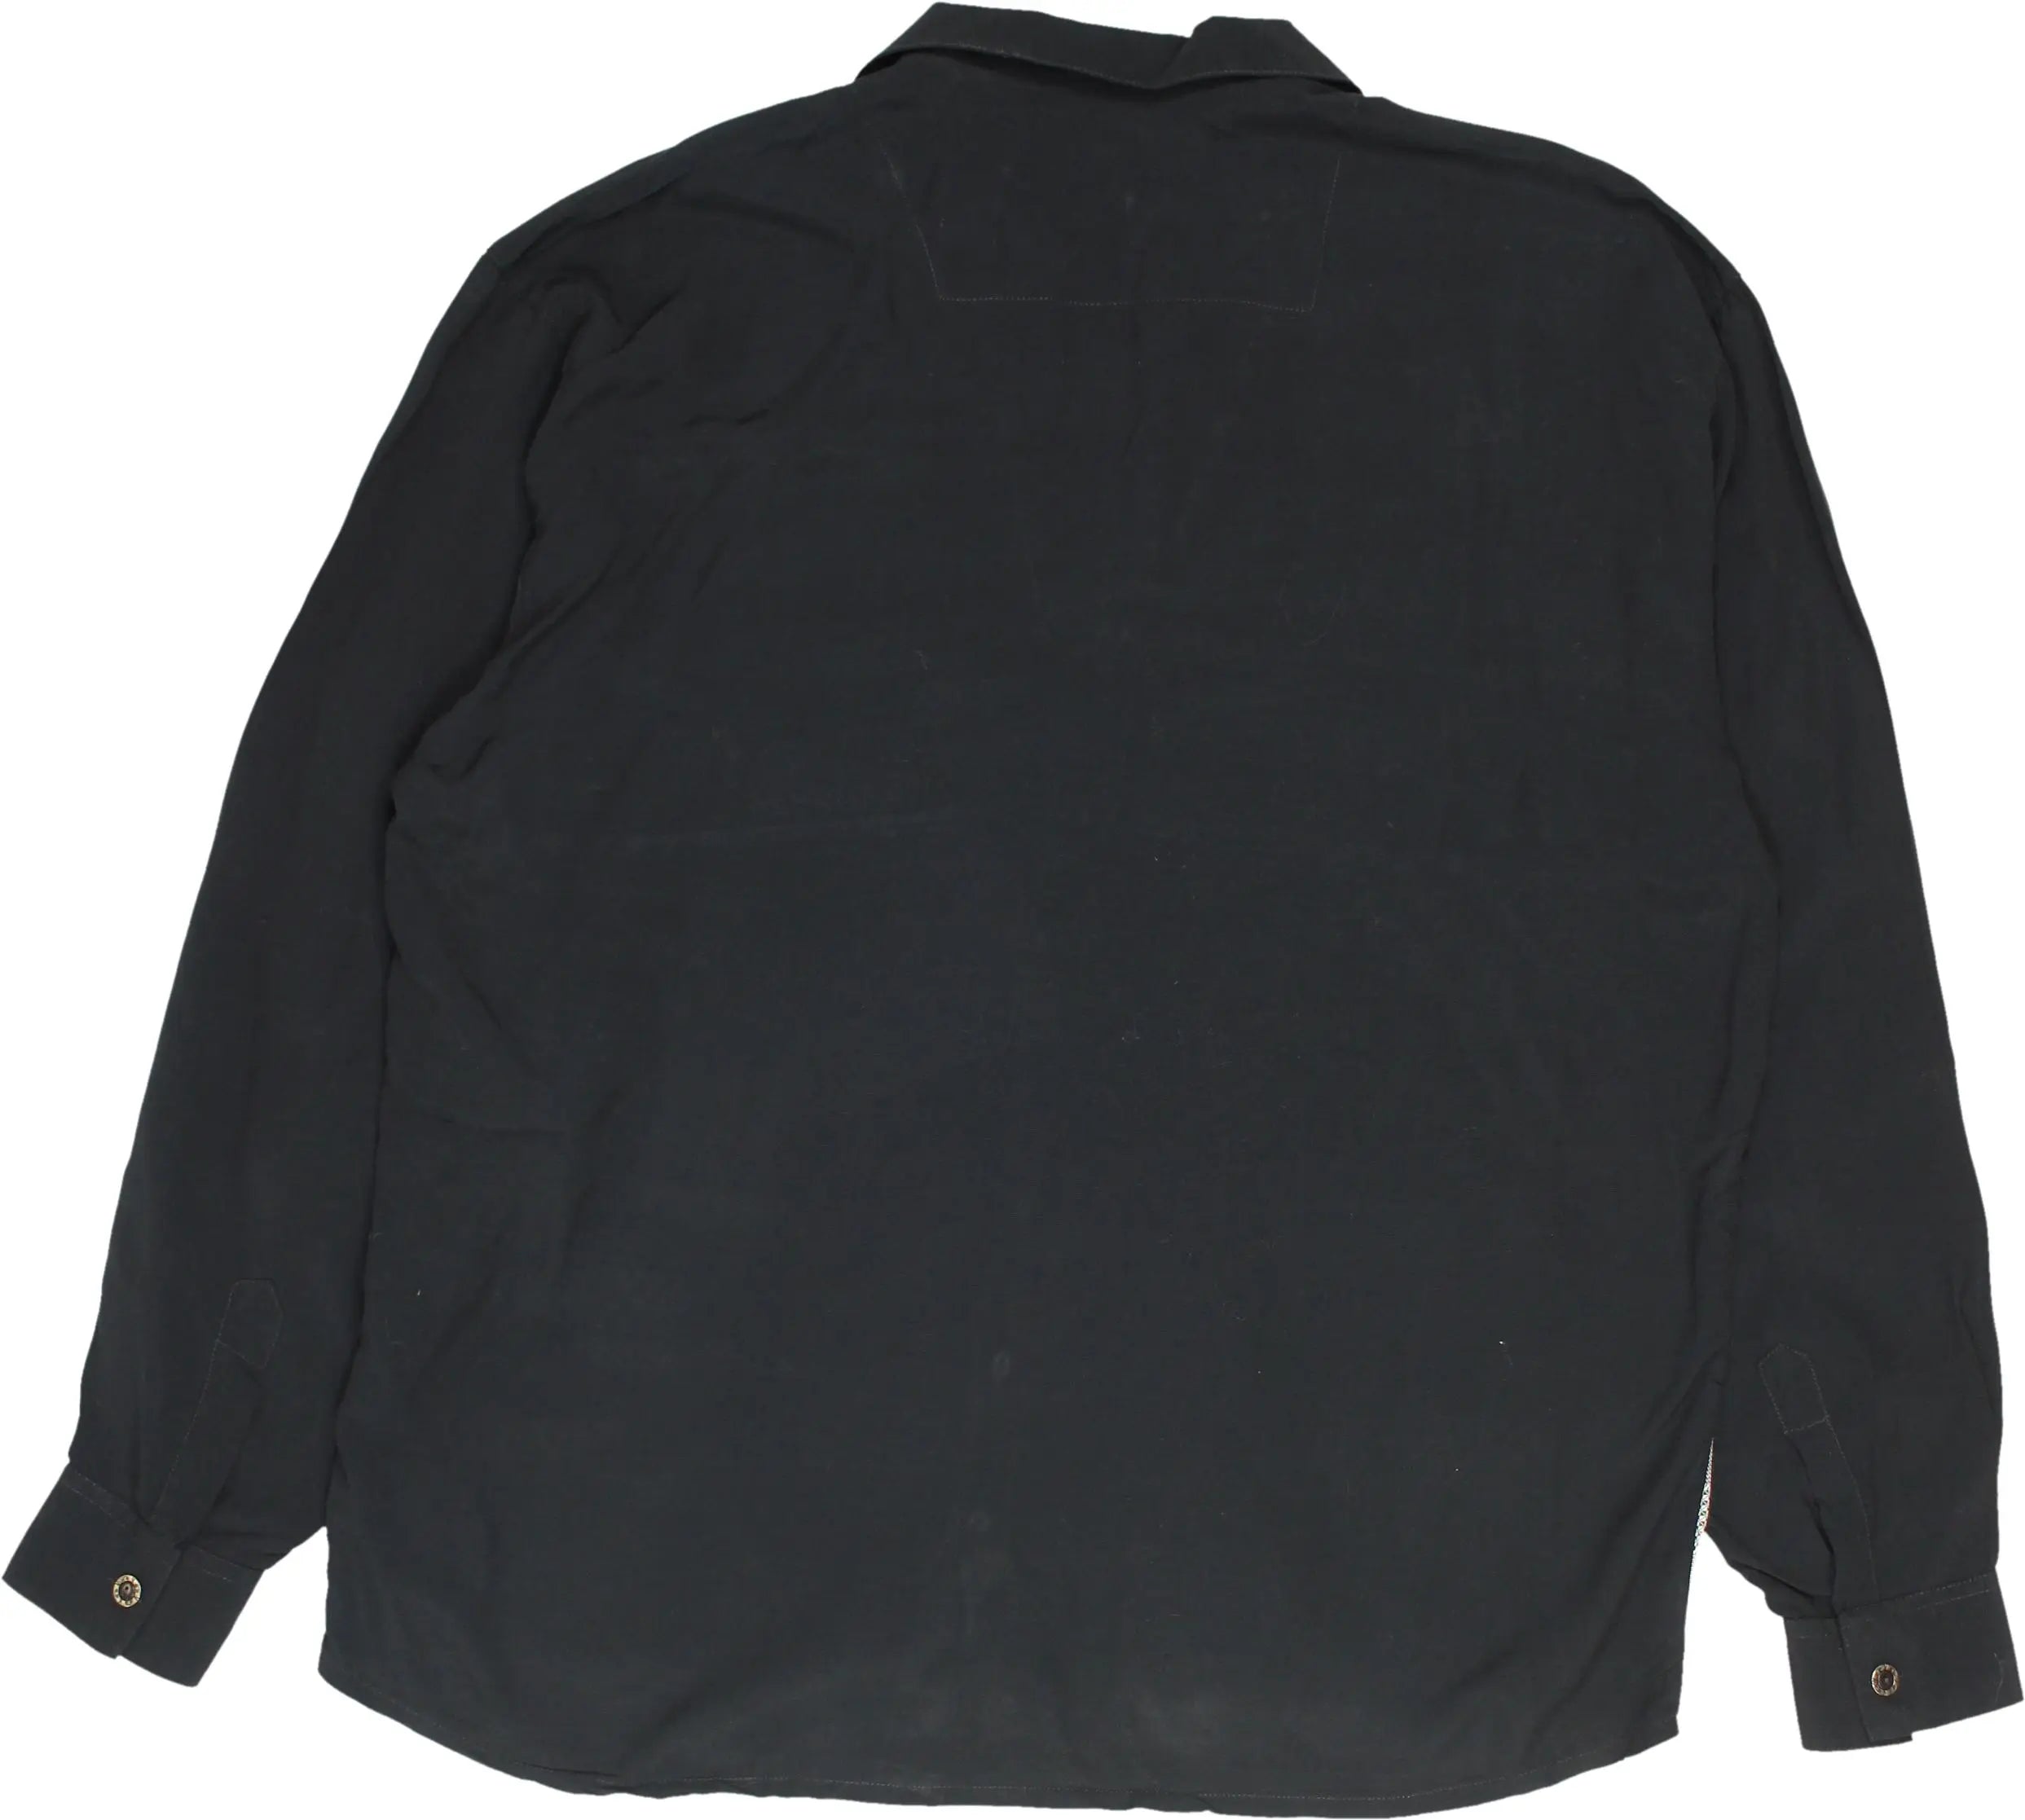 Hobi - Long Sleeve Shirt- ThriftTale.com - Vintage and second handclothing